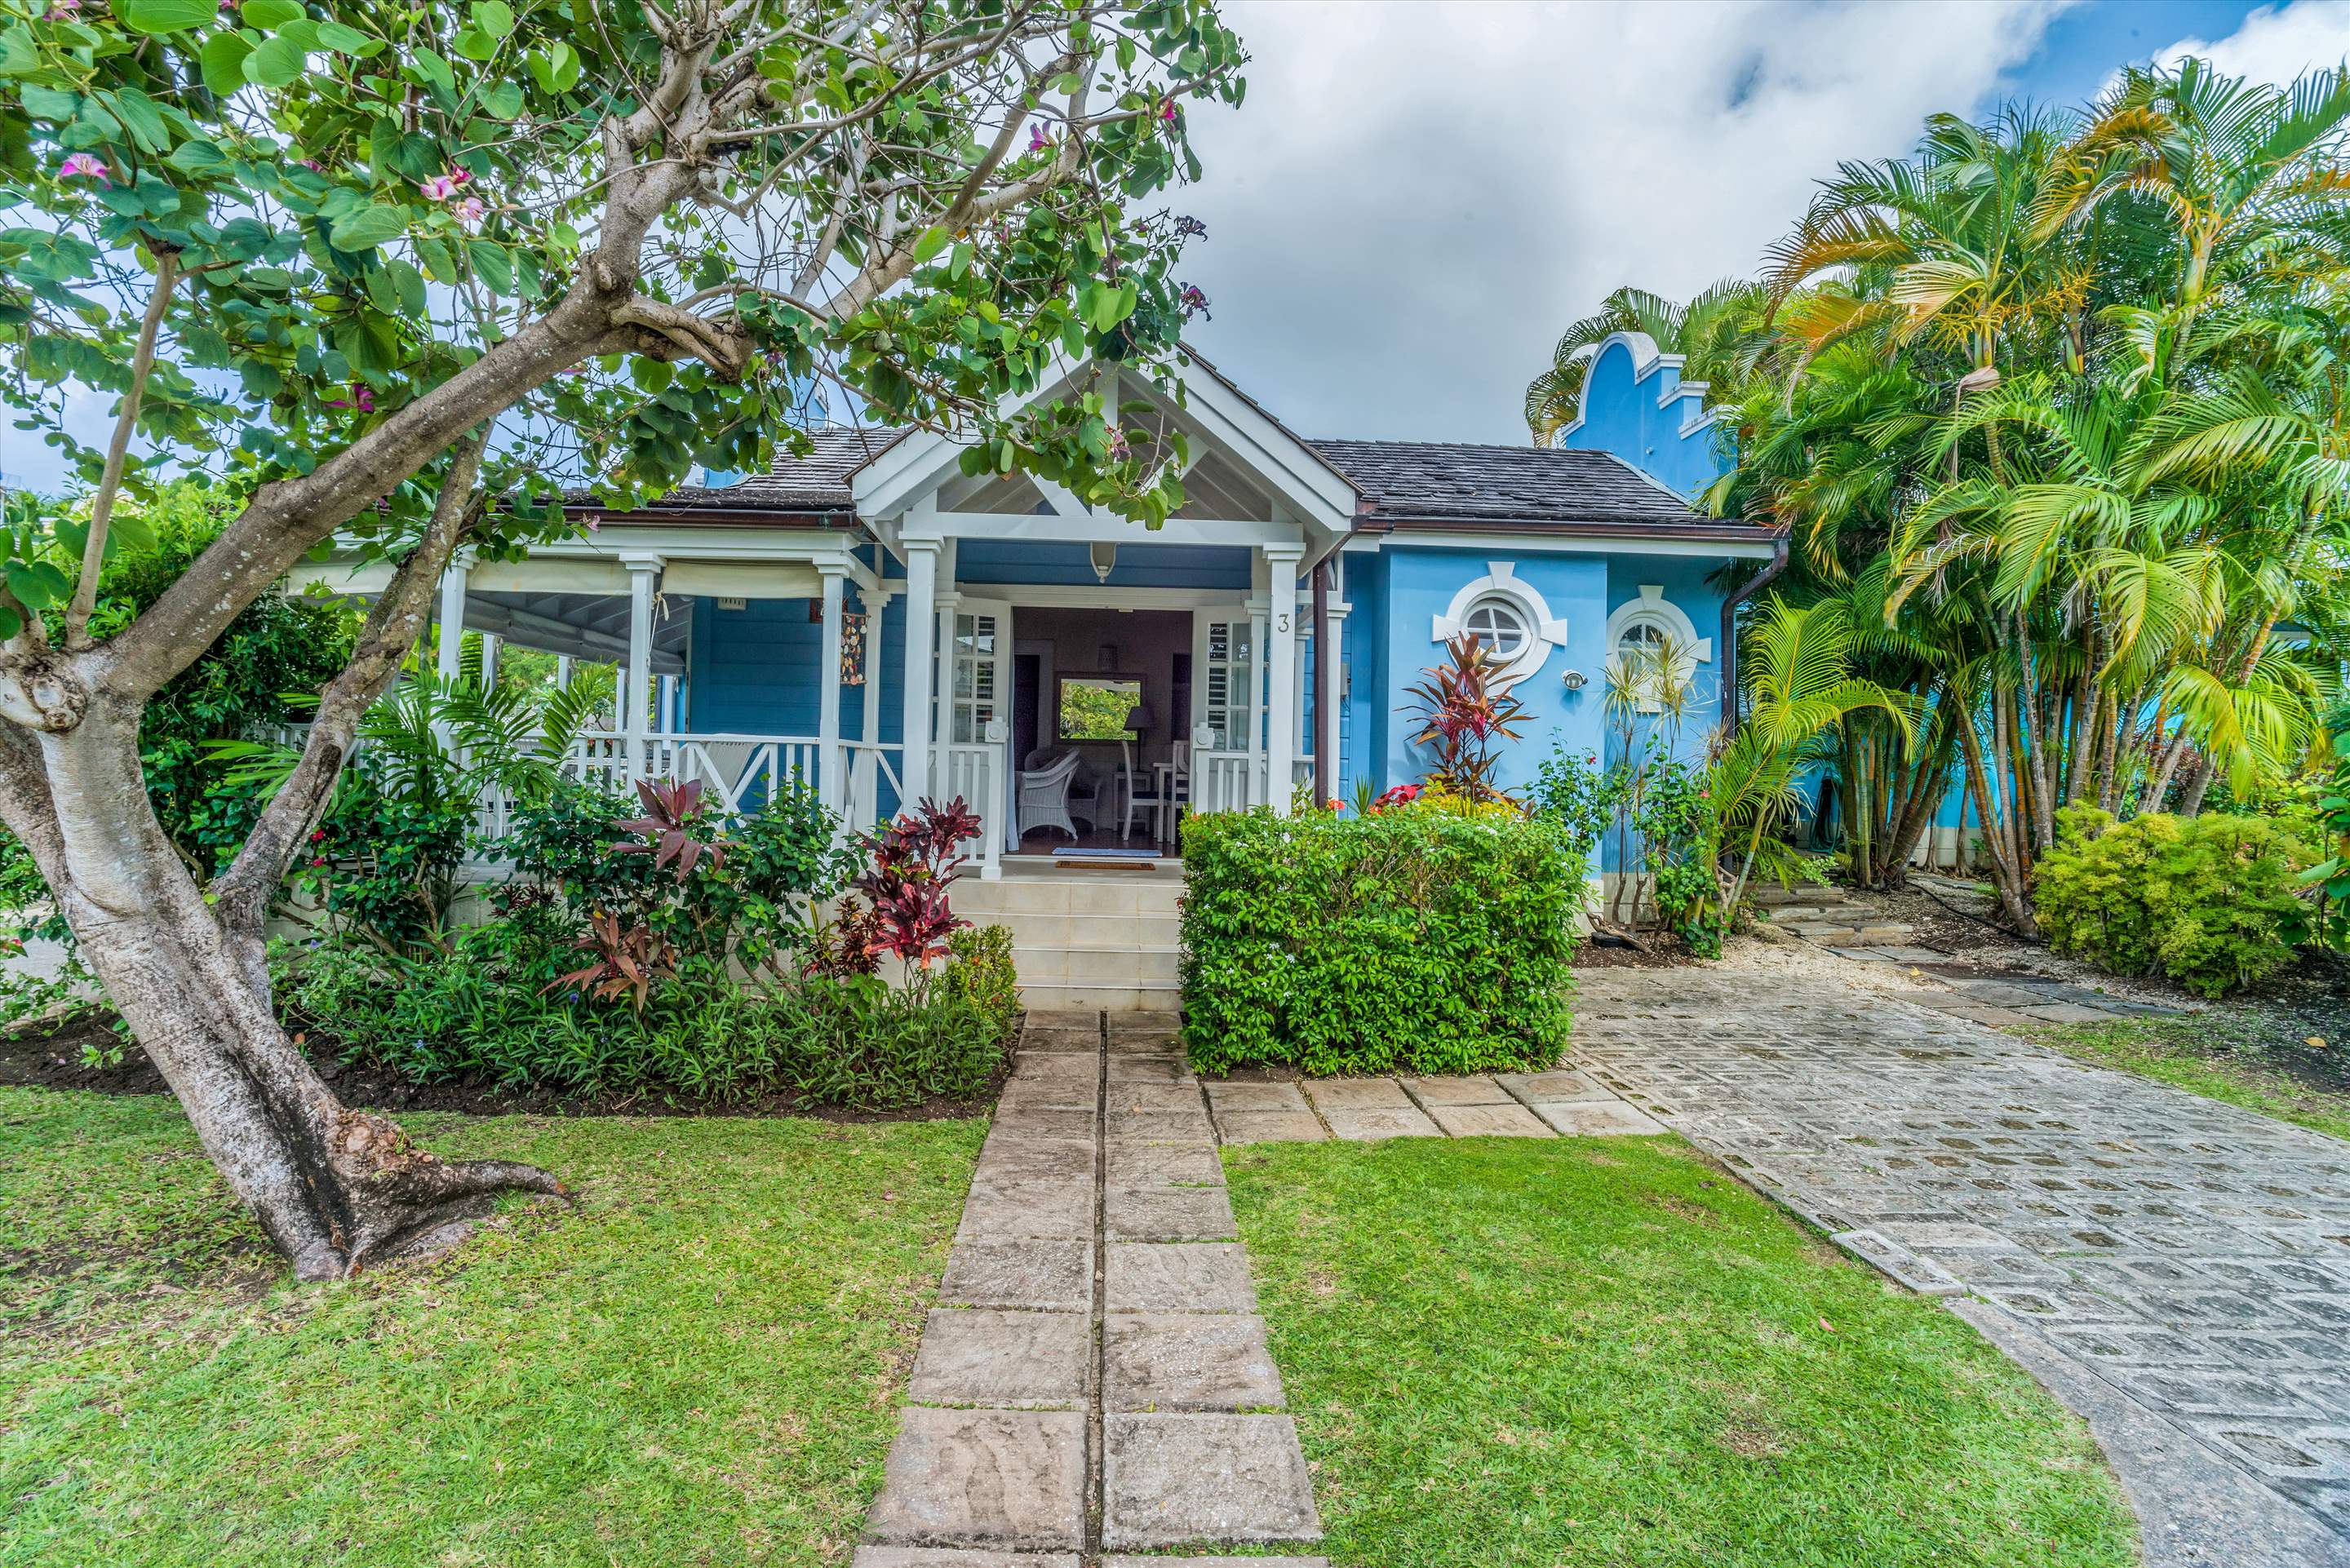 Porters Court 3, 2 bedroom, 2 bedroom villa in St. James & West Coast, Barbados Photo #3